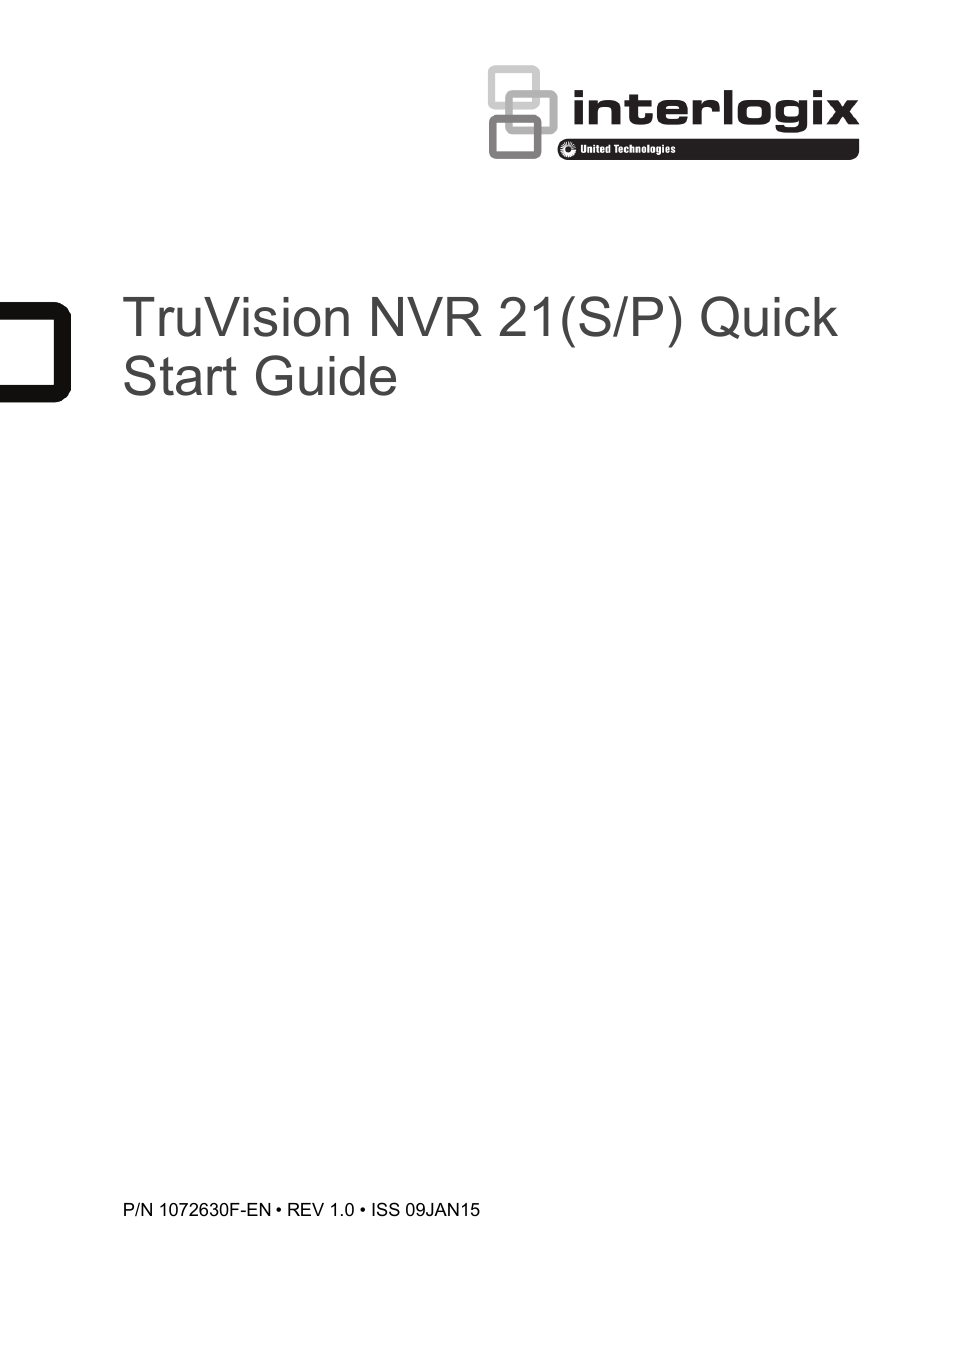 NVR 21 (S/P) Quick Start